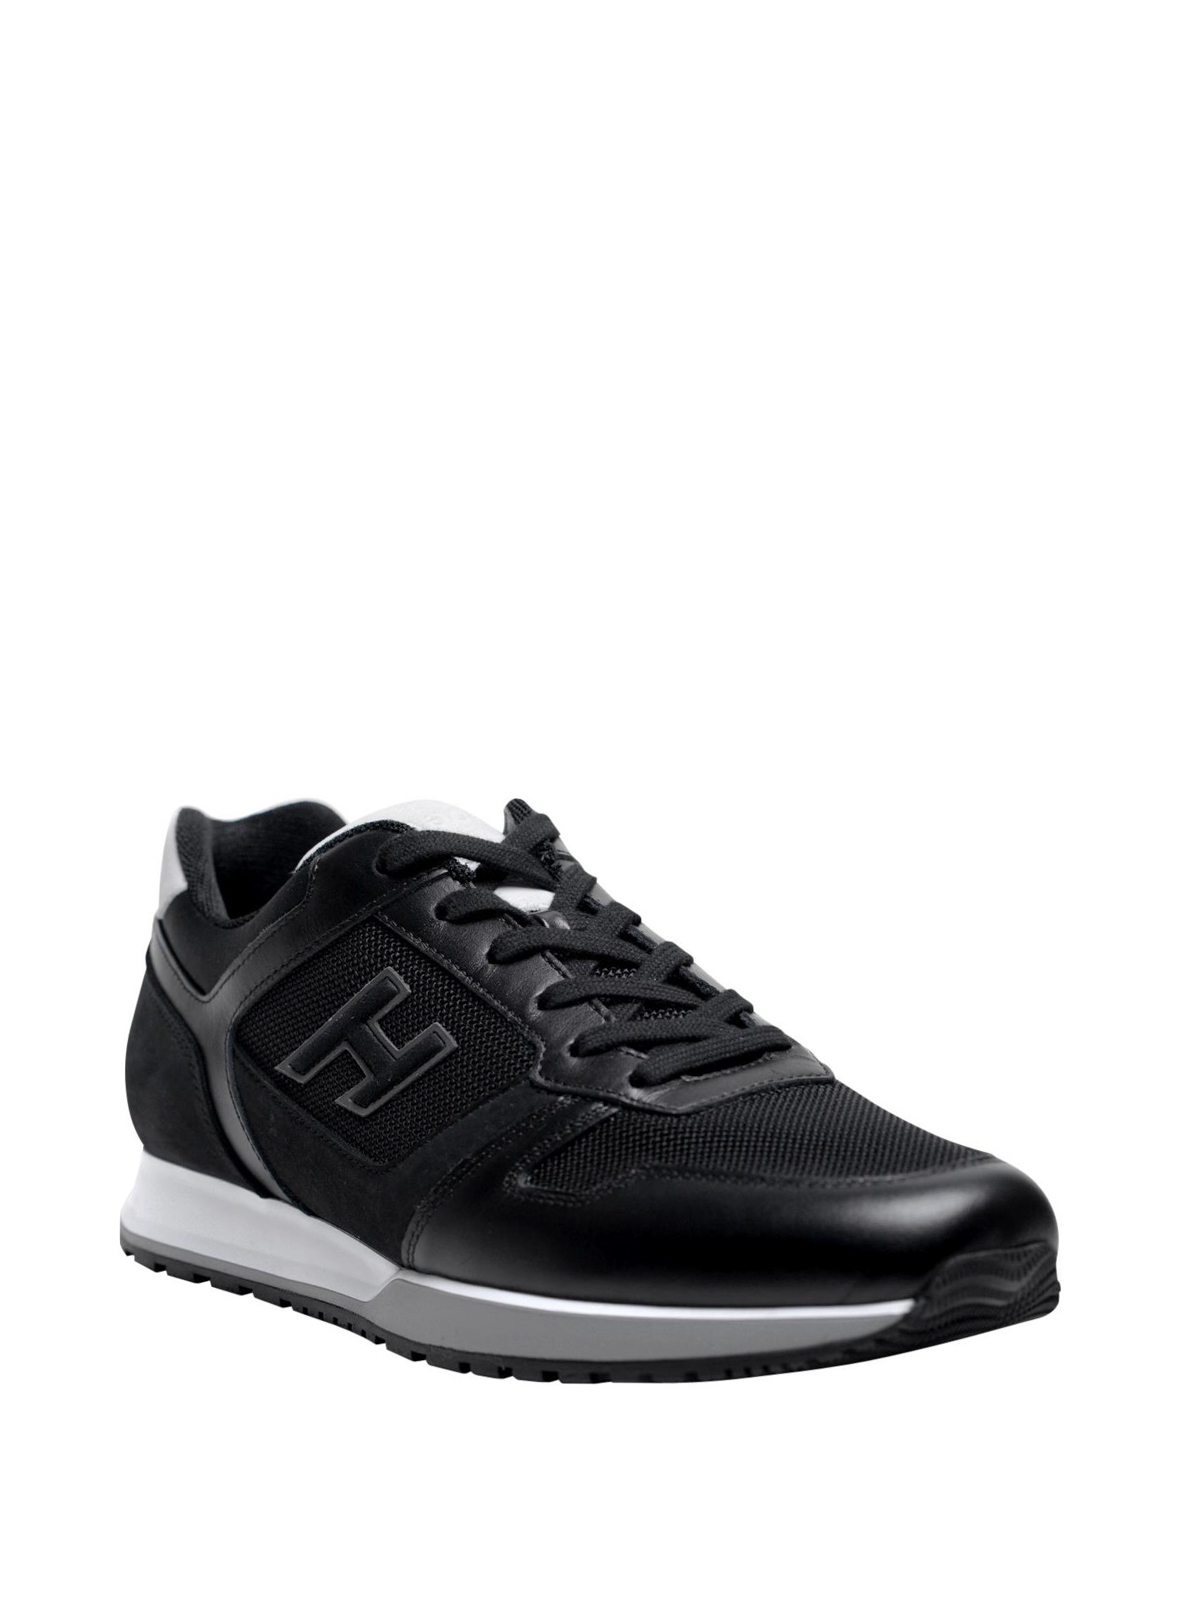 Hogan - H321 black running sneakers 